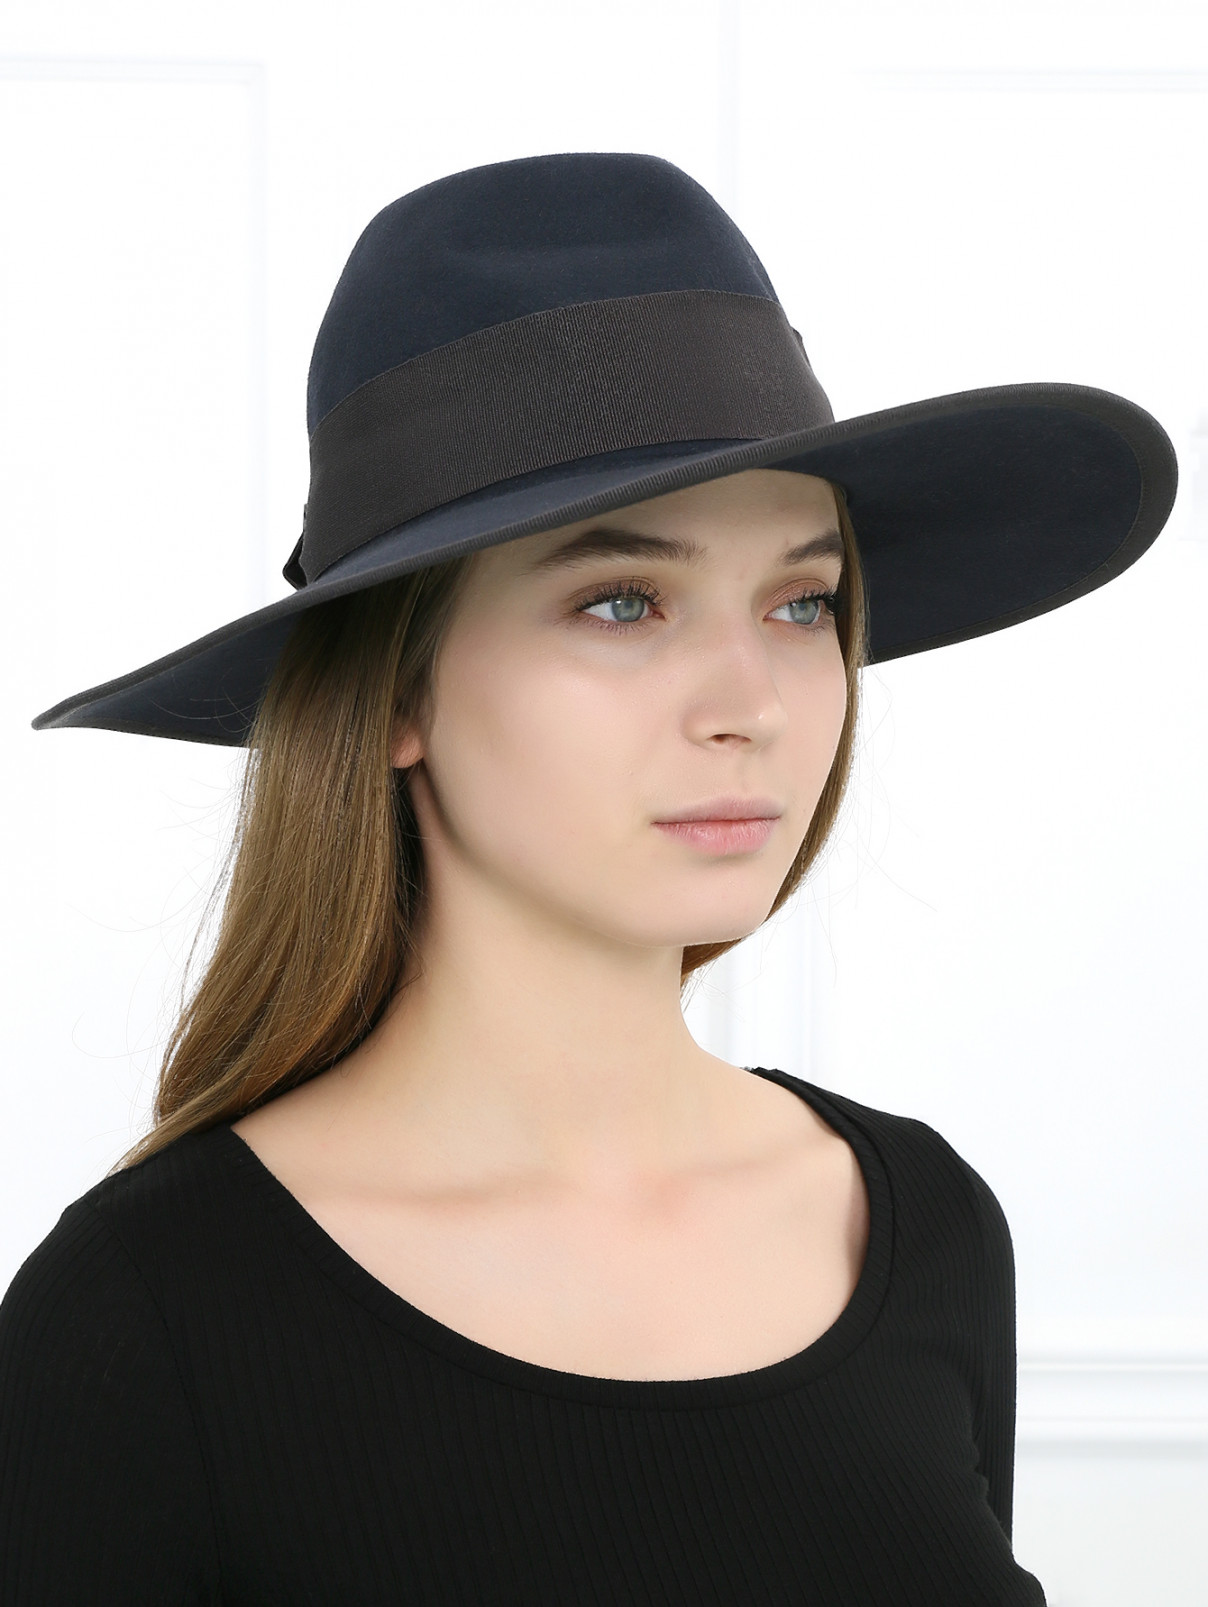 Шляпа из фетра с широкими полями Federica Moretti  –  Модель Общий вид  – Цвет:  Синий